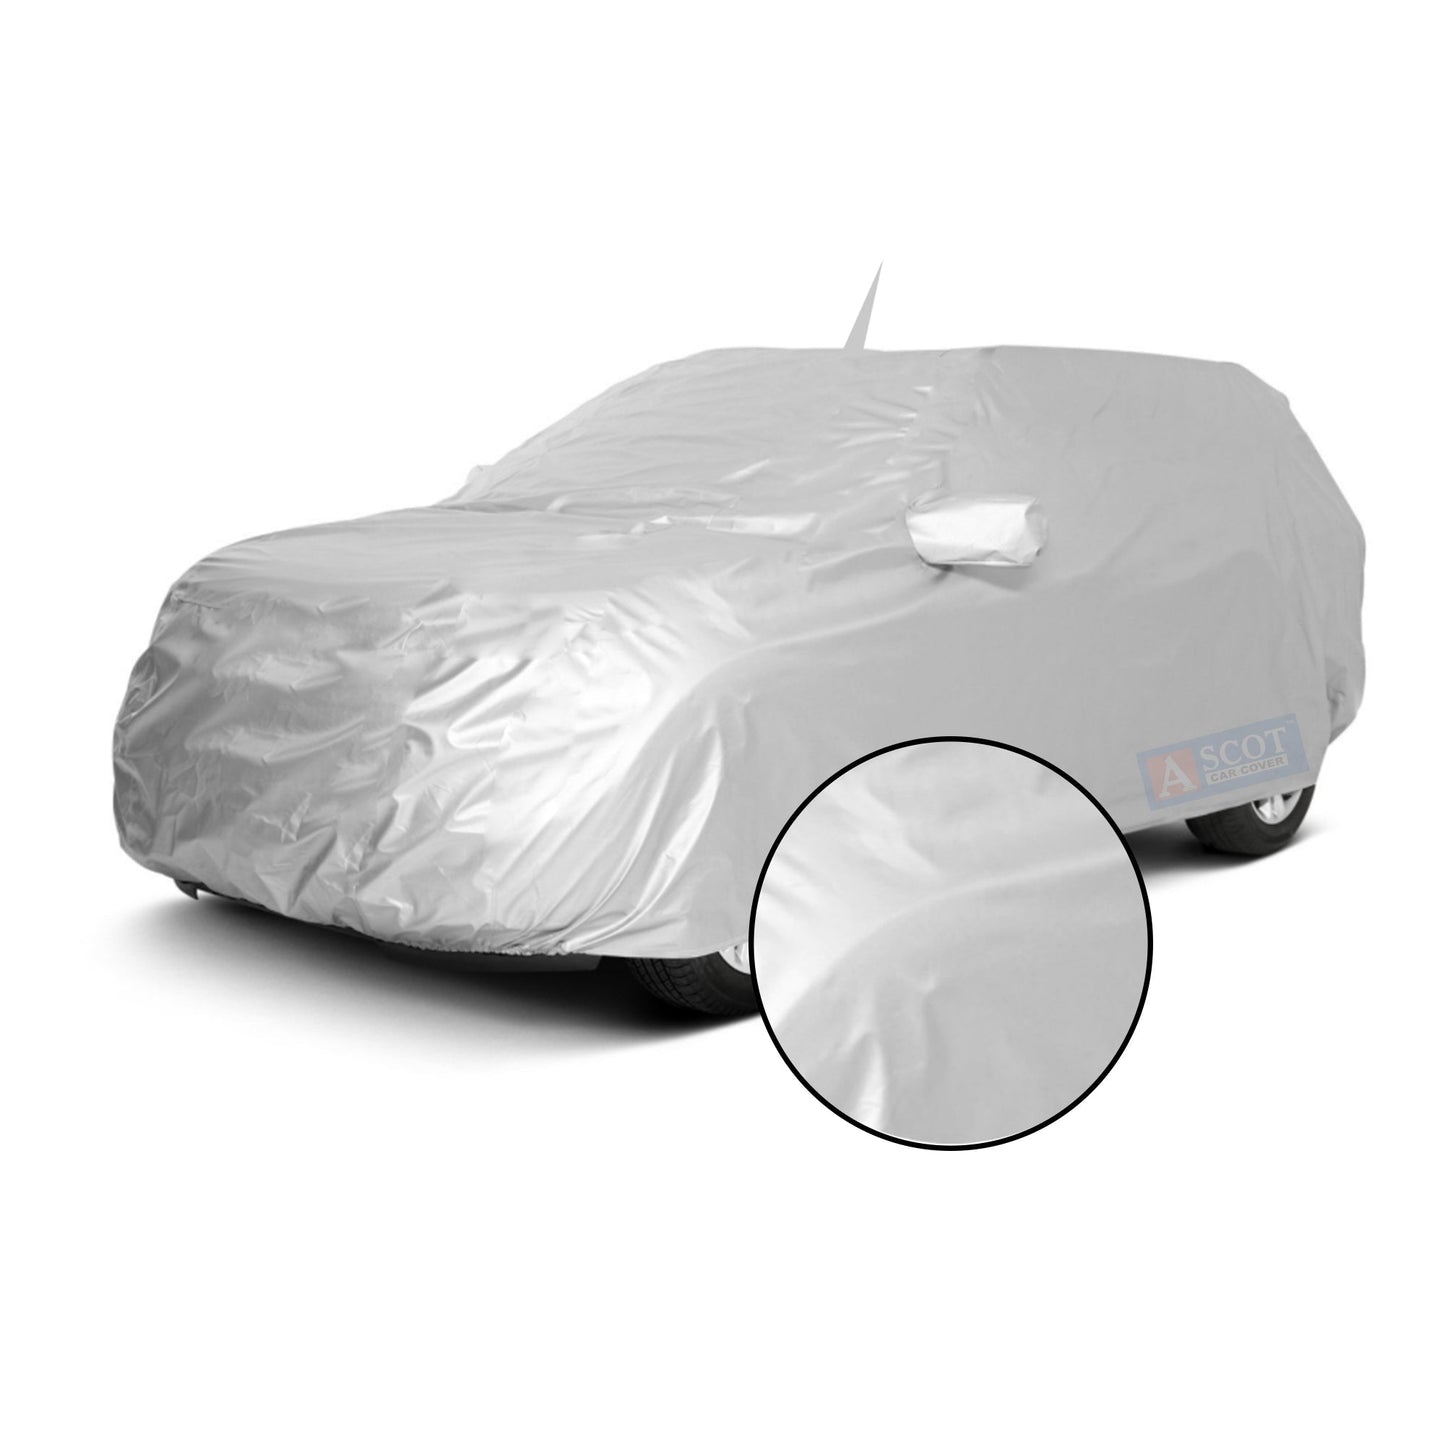 Ascot Skoda Kushaq Car Body Cover Dust Proof, Trippel Stitched